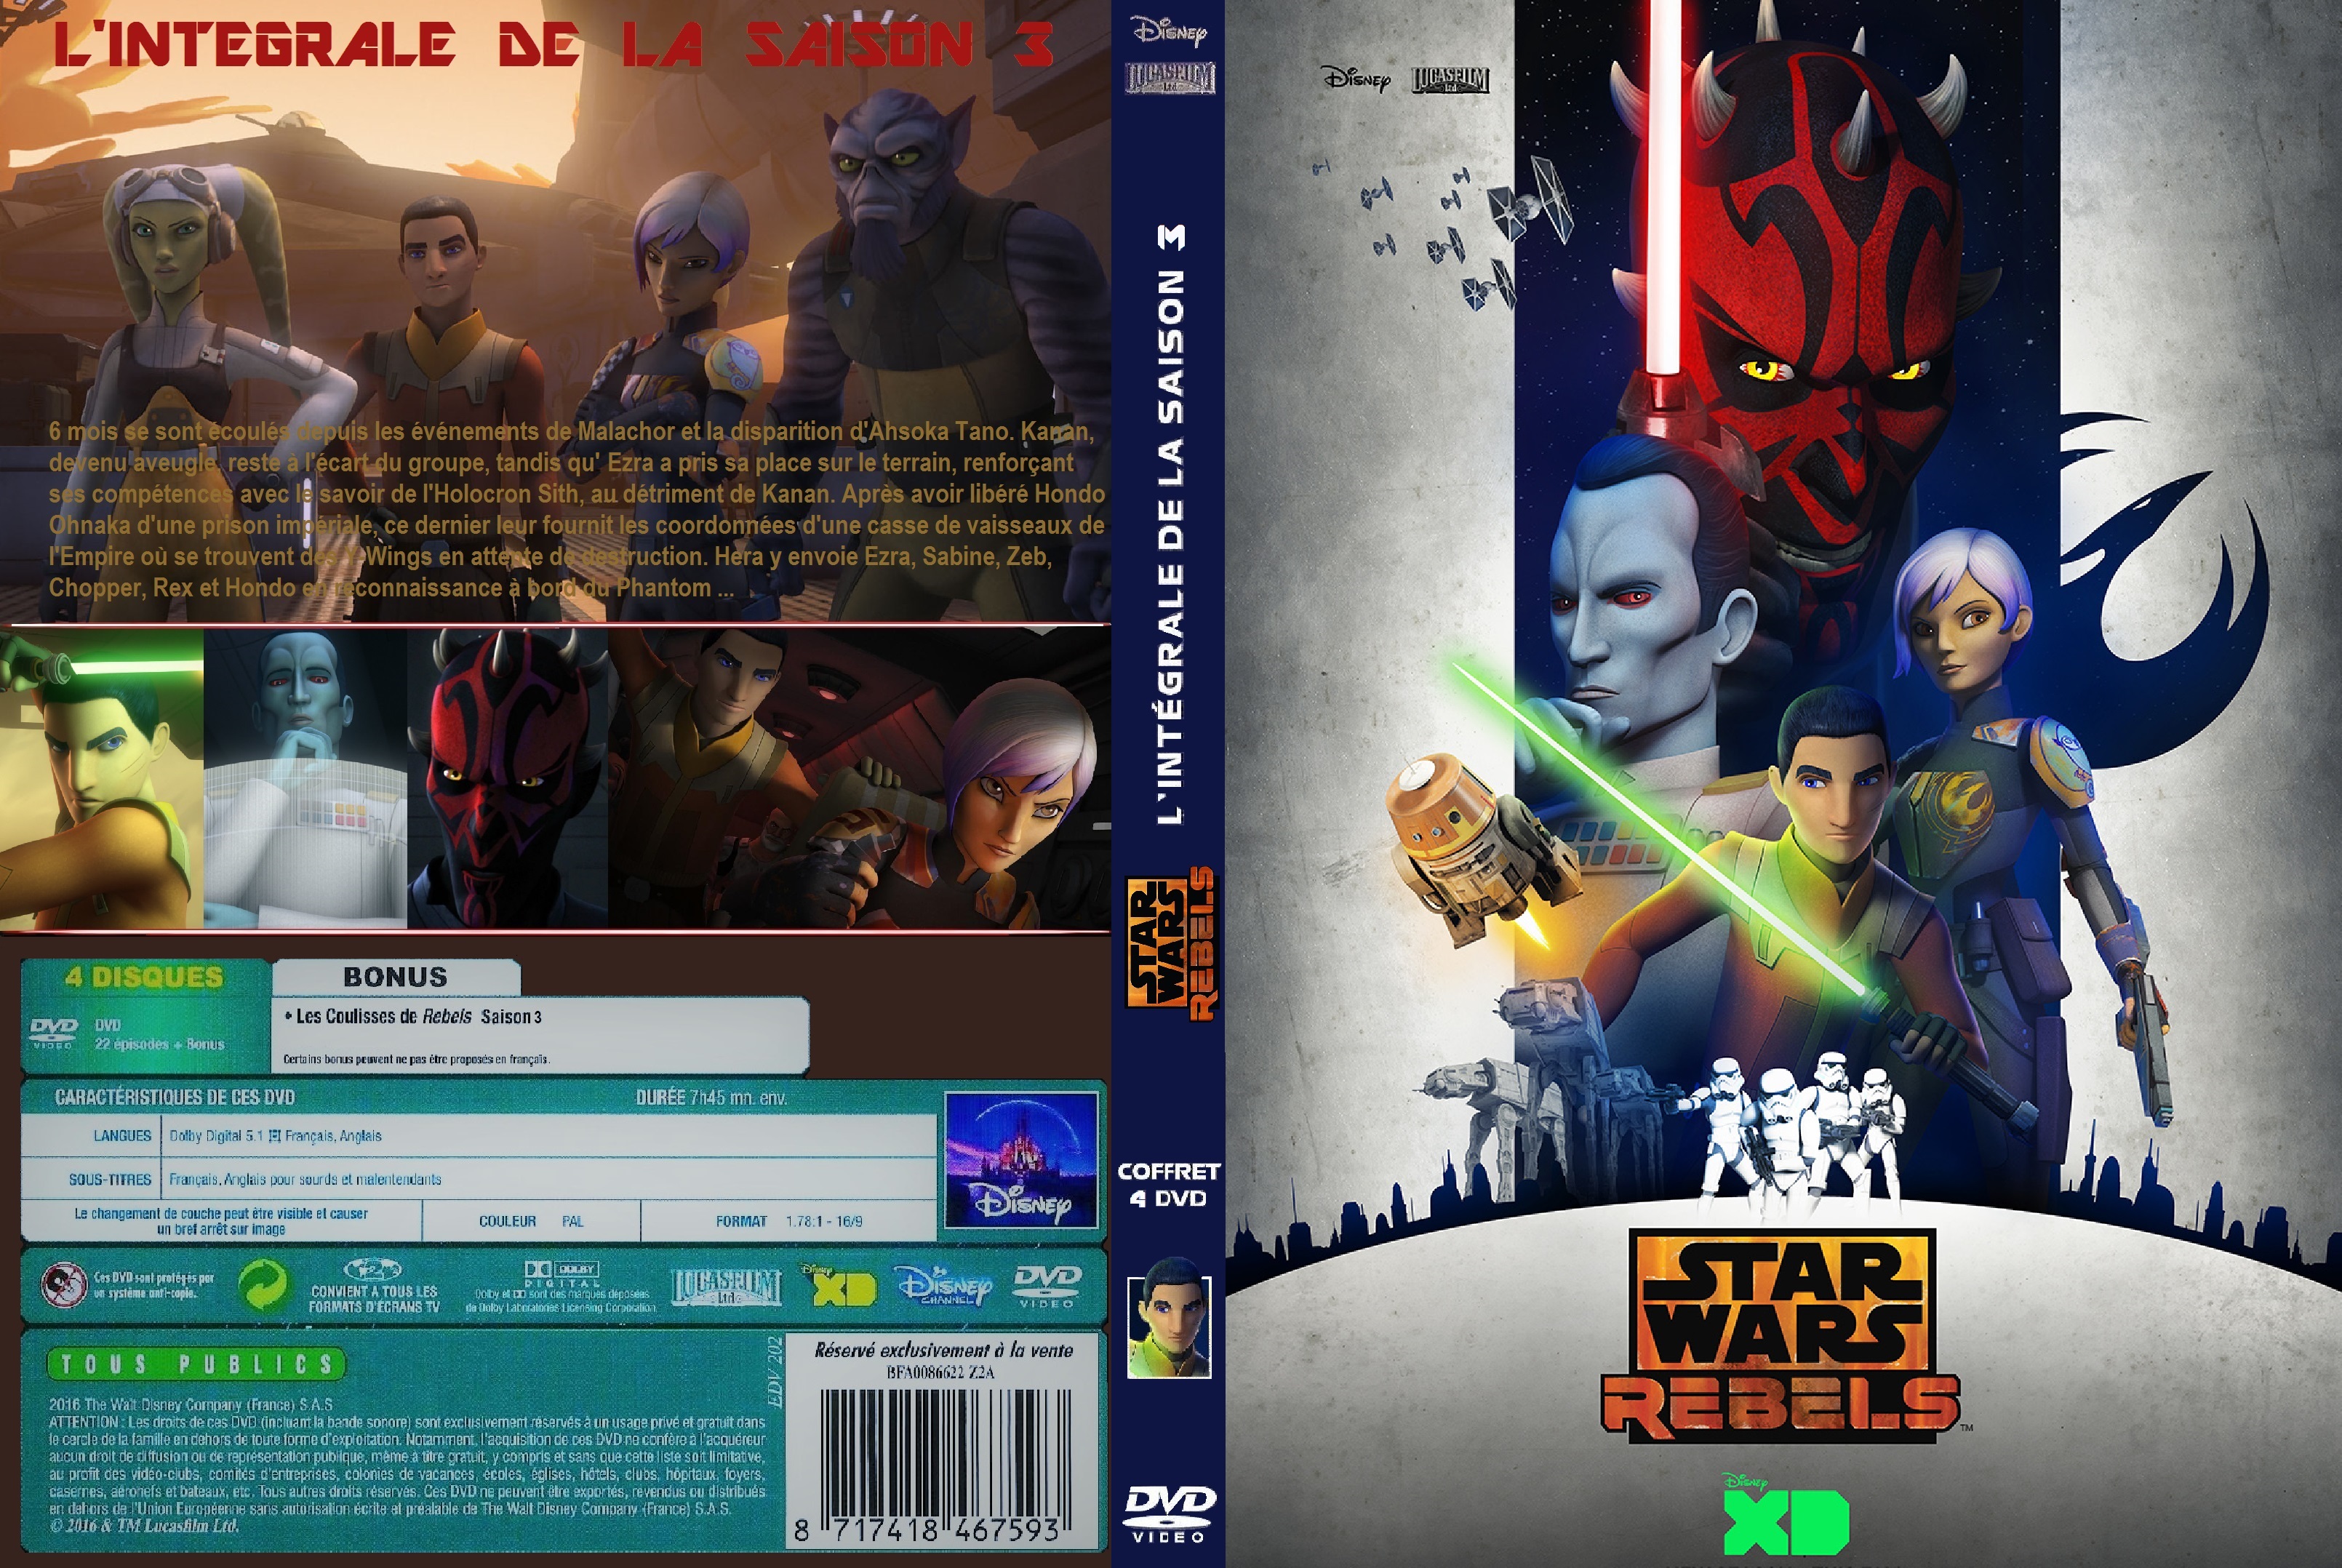 Jaquette DVD Star Wars Rebels saison 3 custom v2